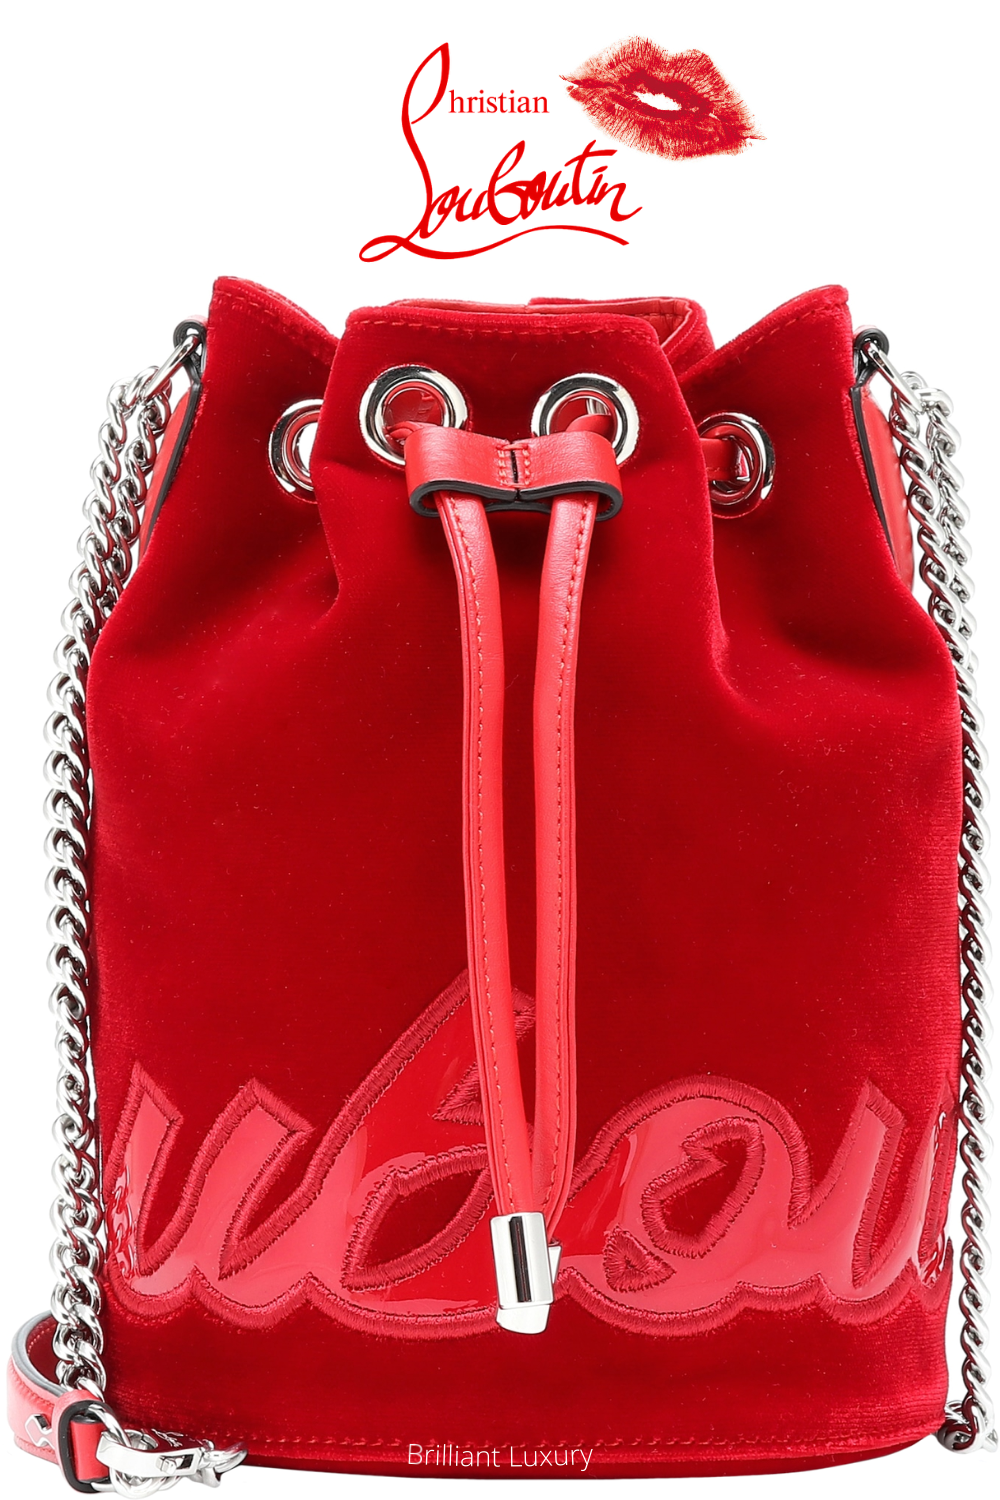 ♦Christian Louboutin Loubi Marie Jane red velvet bucket bag #christianlouboutin #bags #red #brilliantluxury